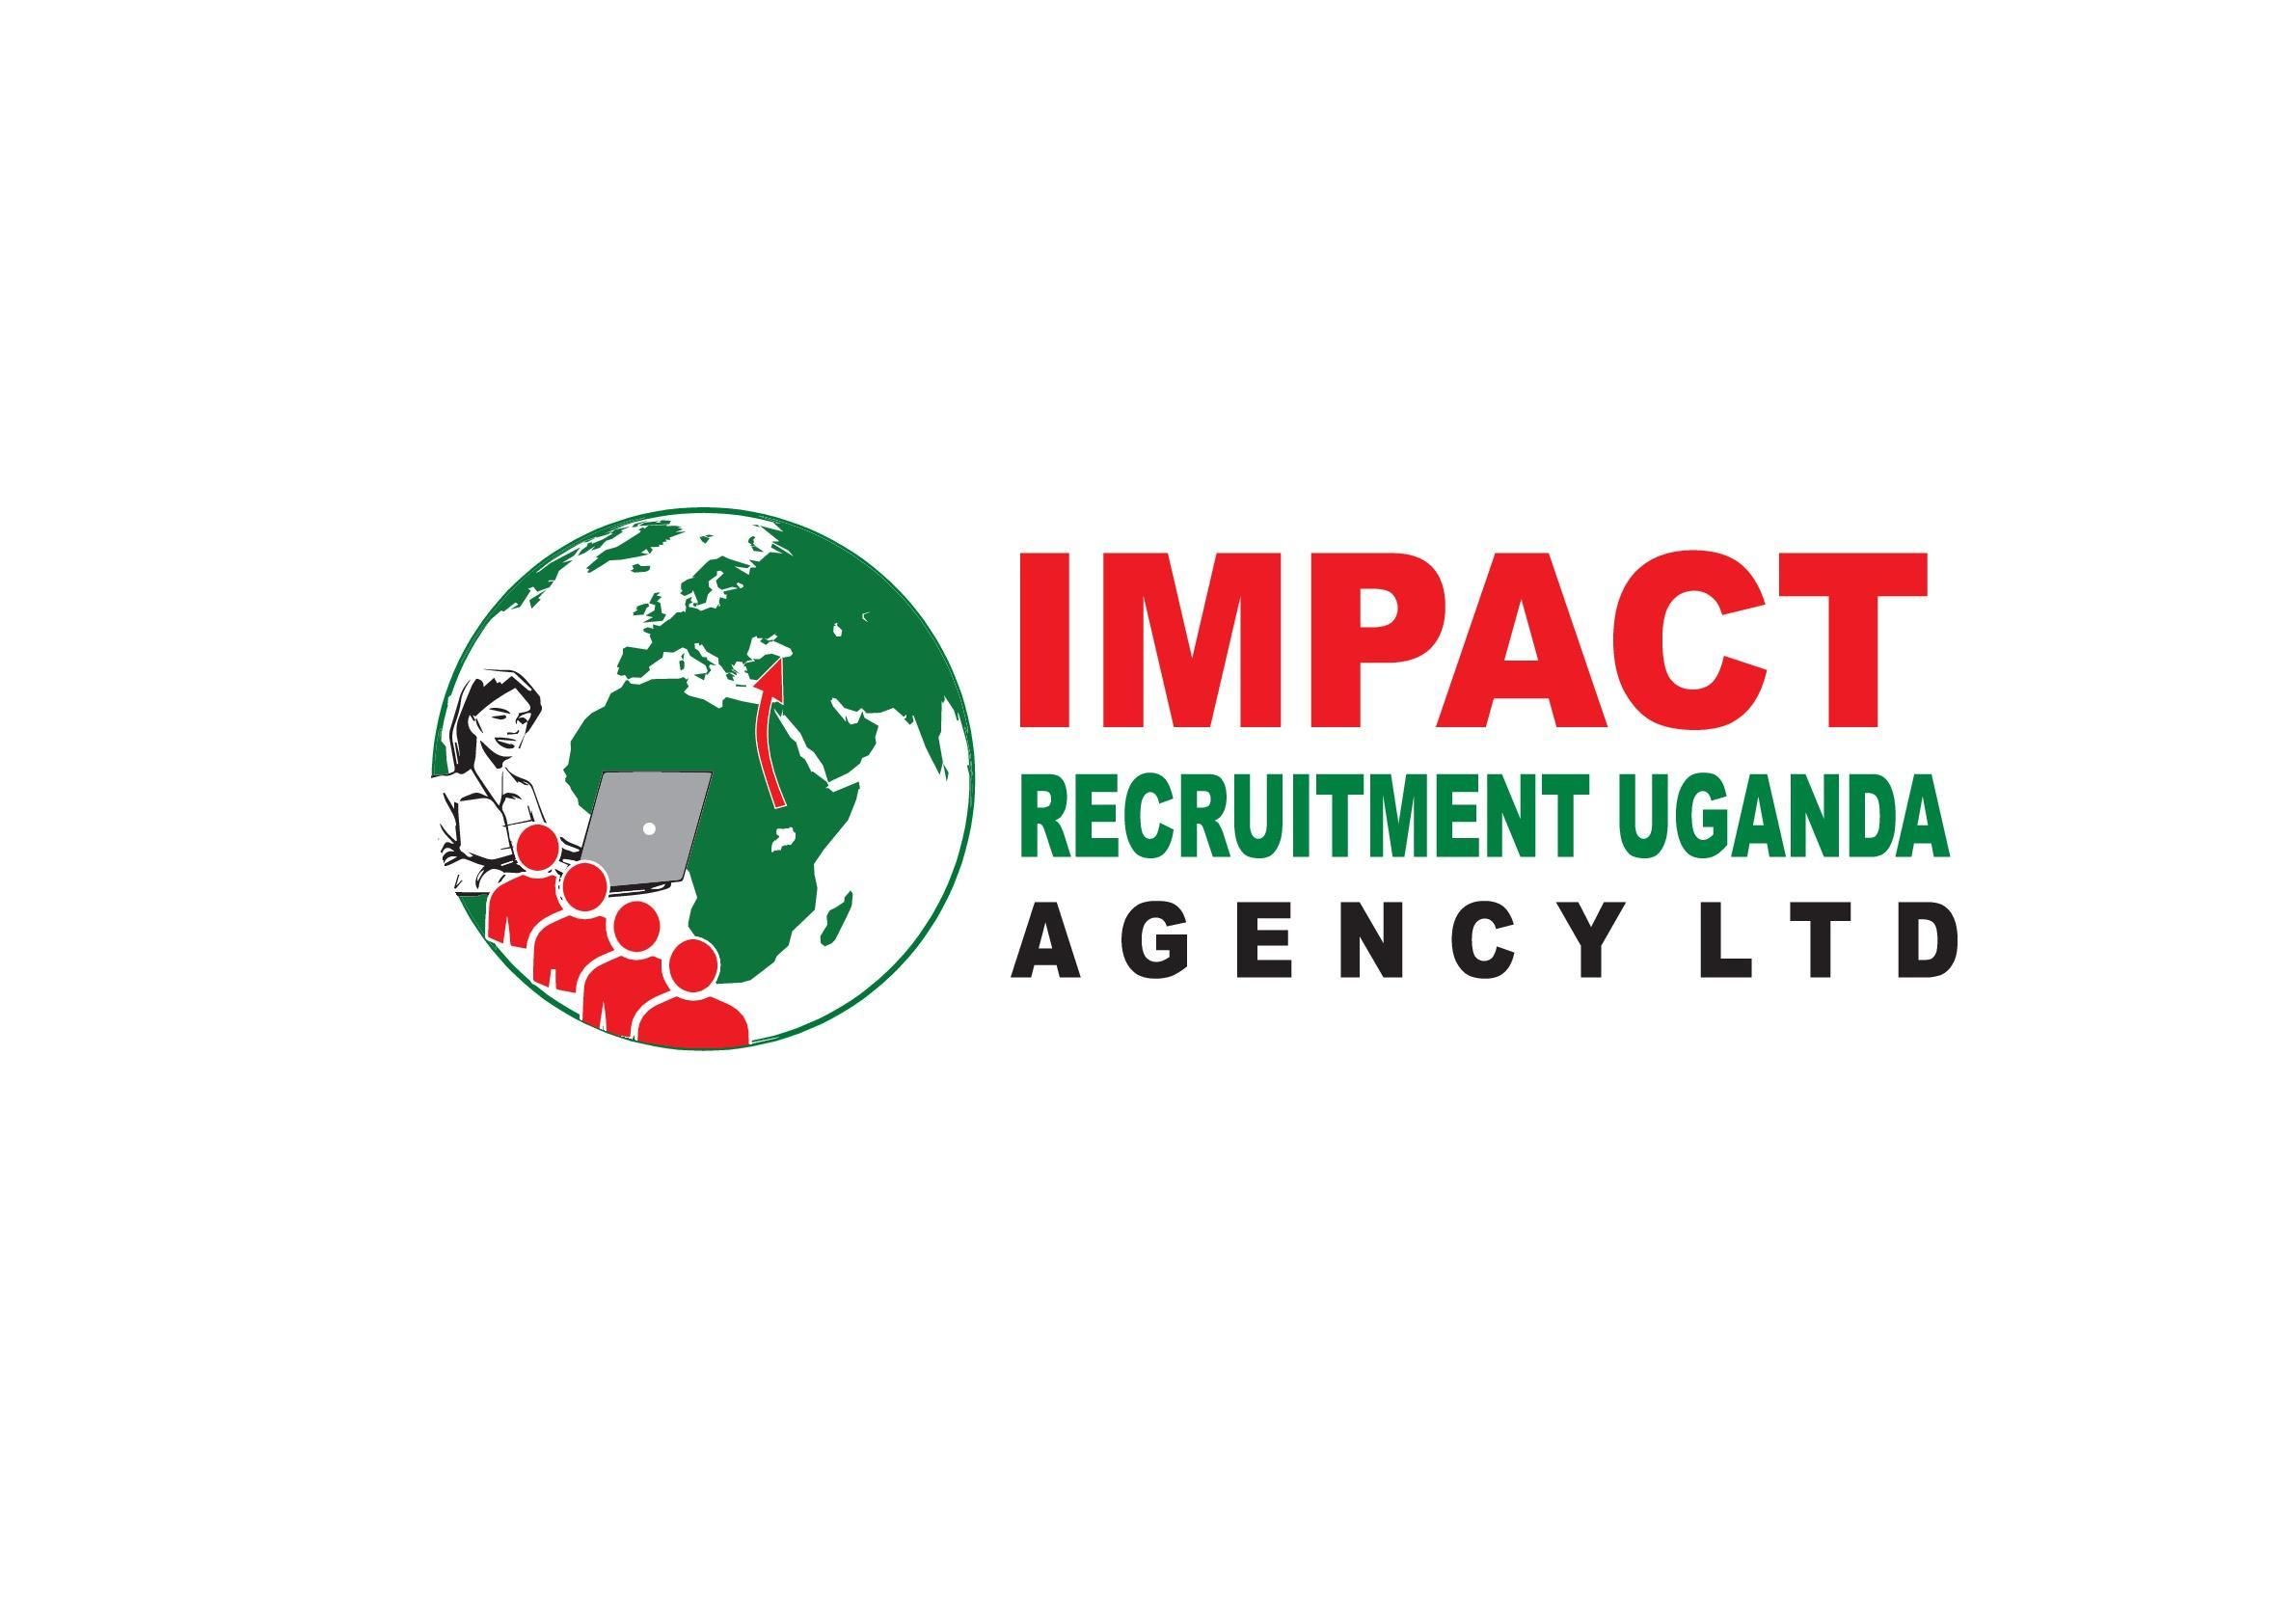 IMPACT RECRUITMENT UGANDA AGENCY LTD